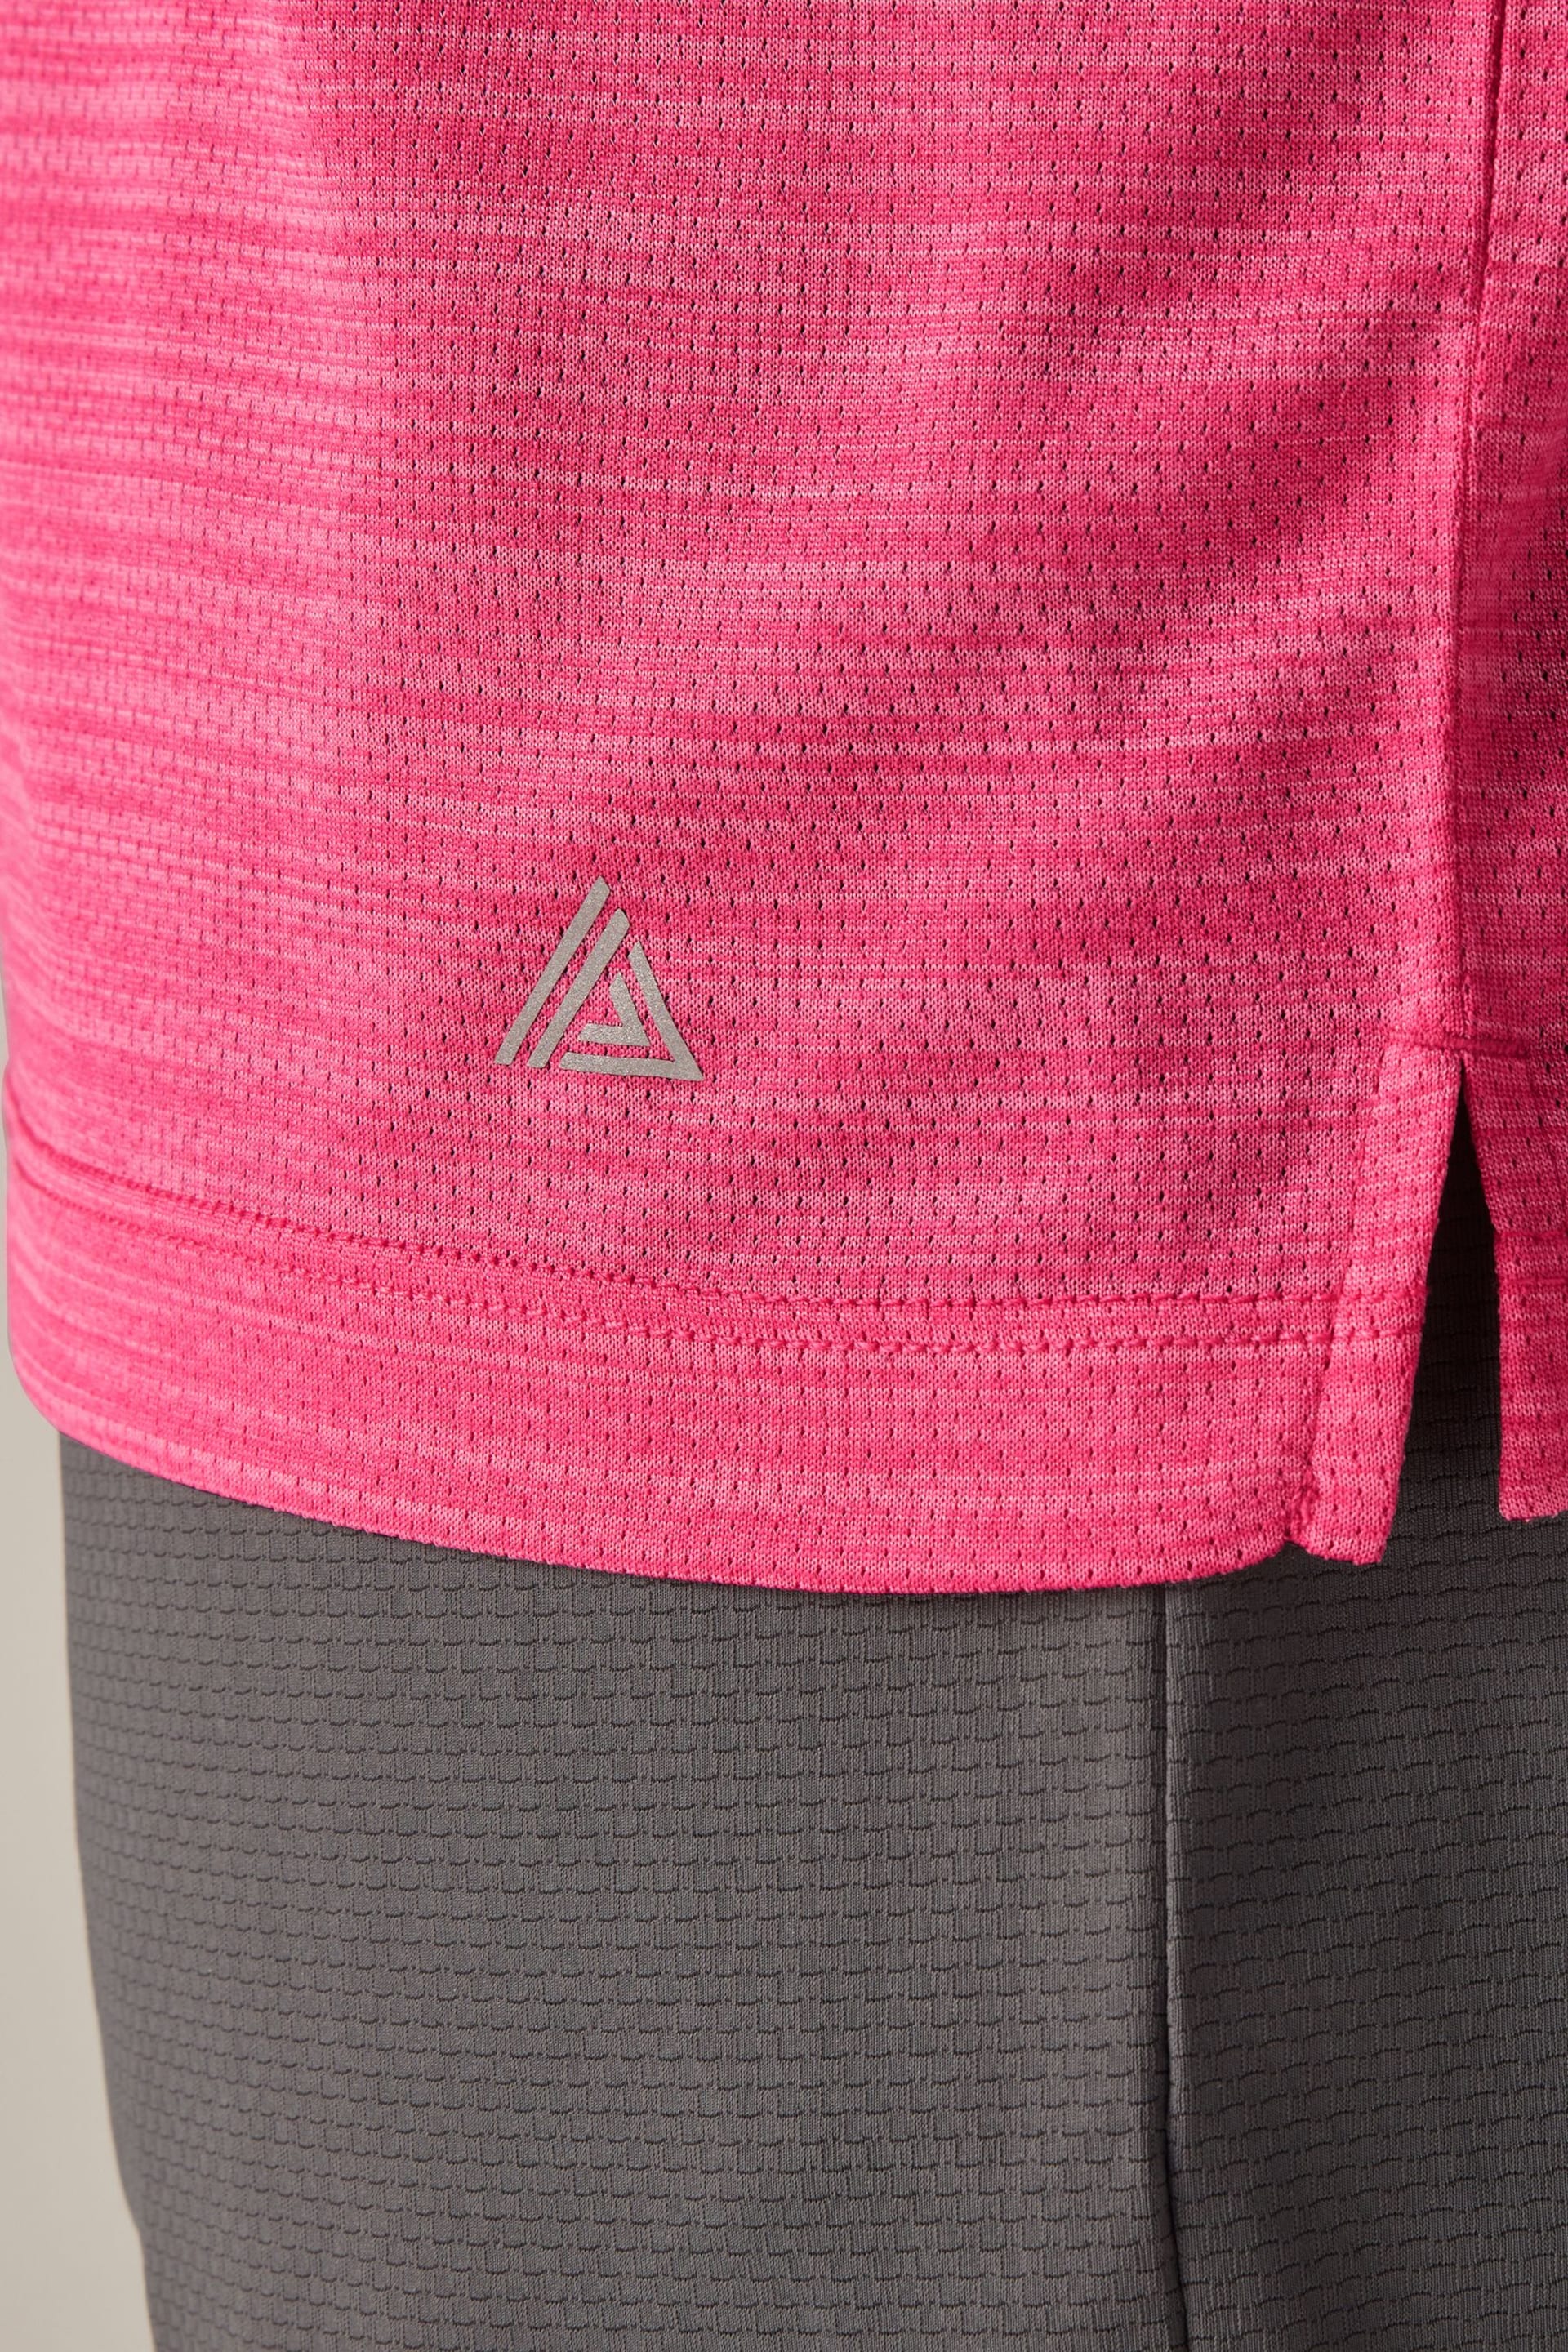 Pink Active Mesh Training T-Shirt - Image 6 of 9